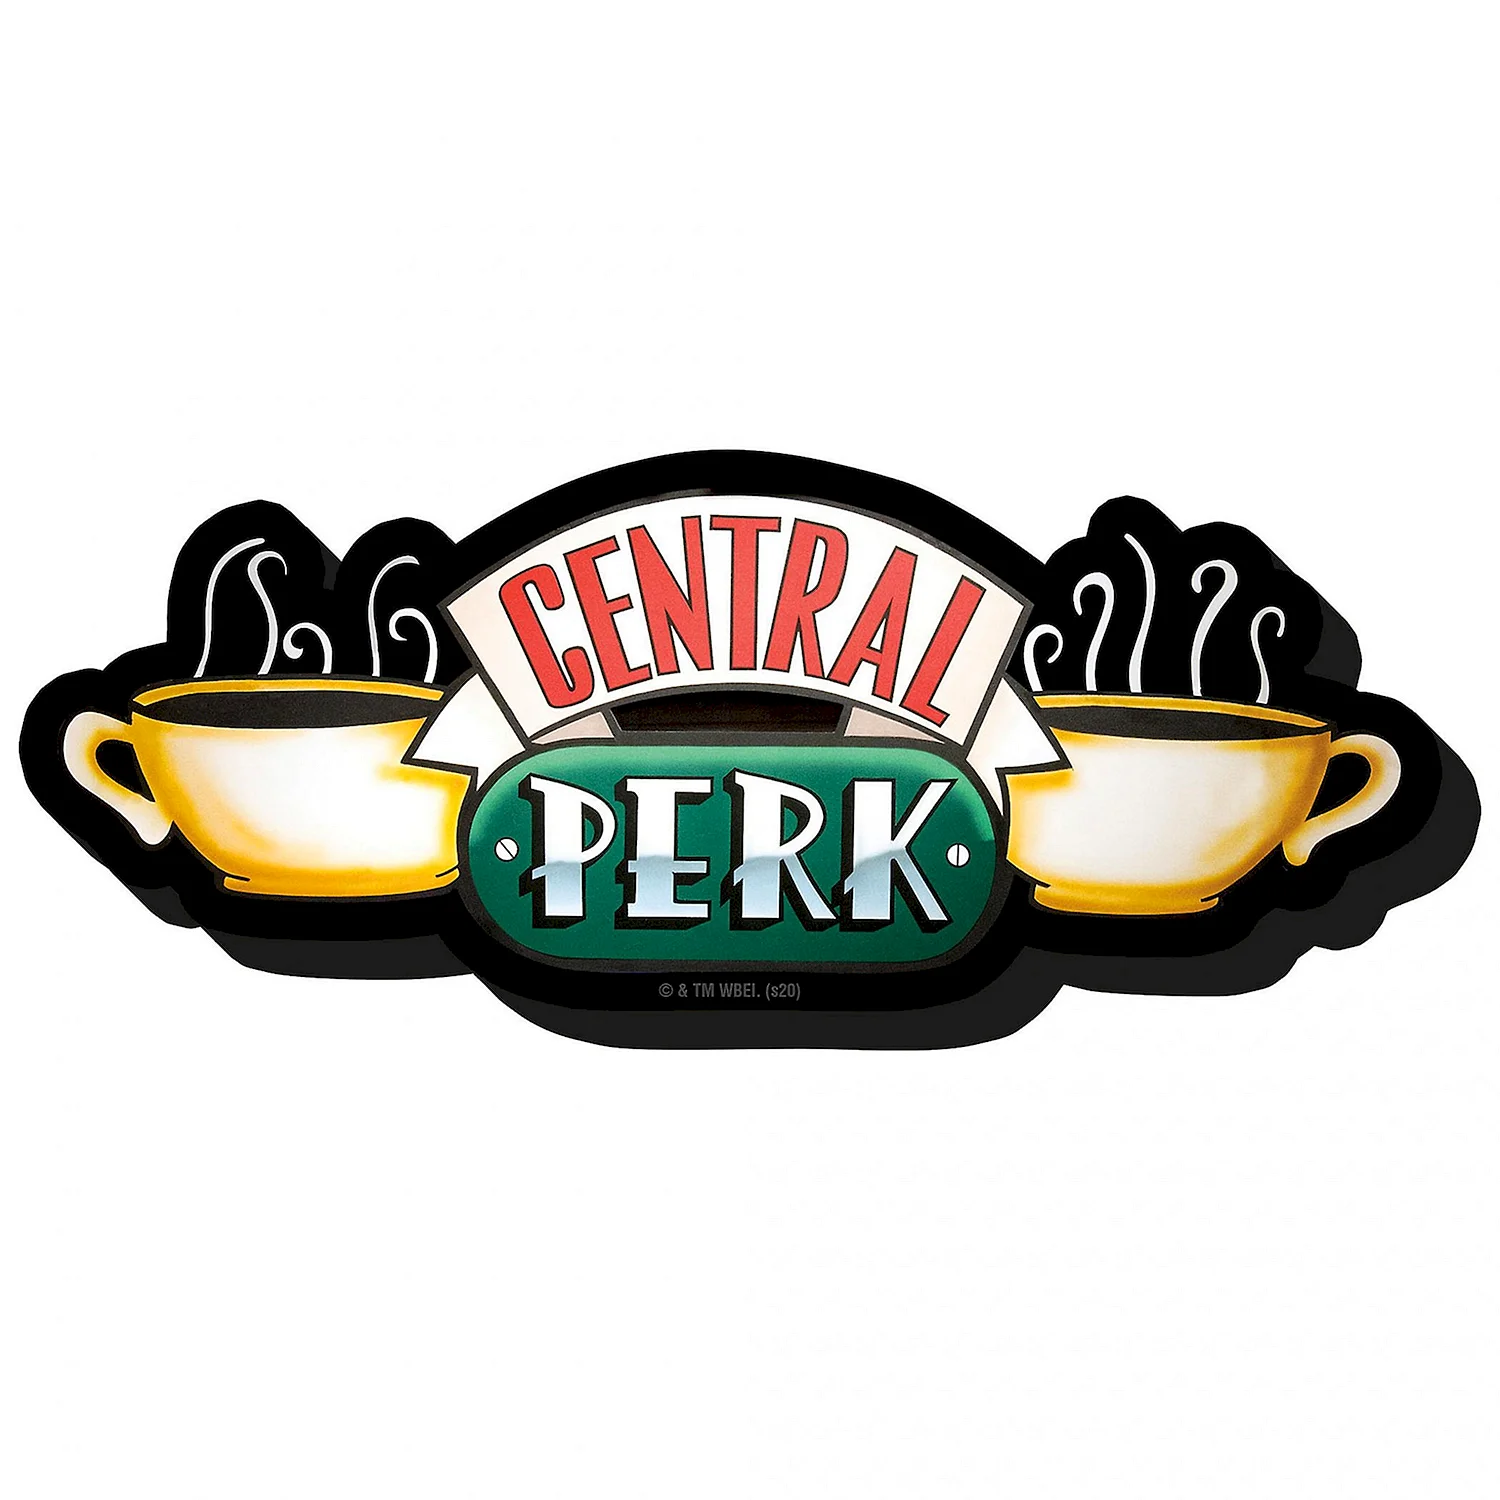 Central Perk кофейня логотип